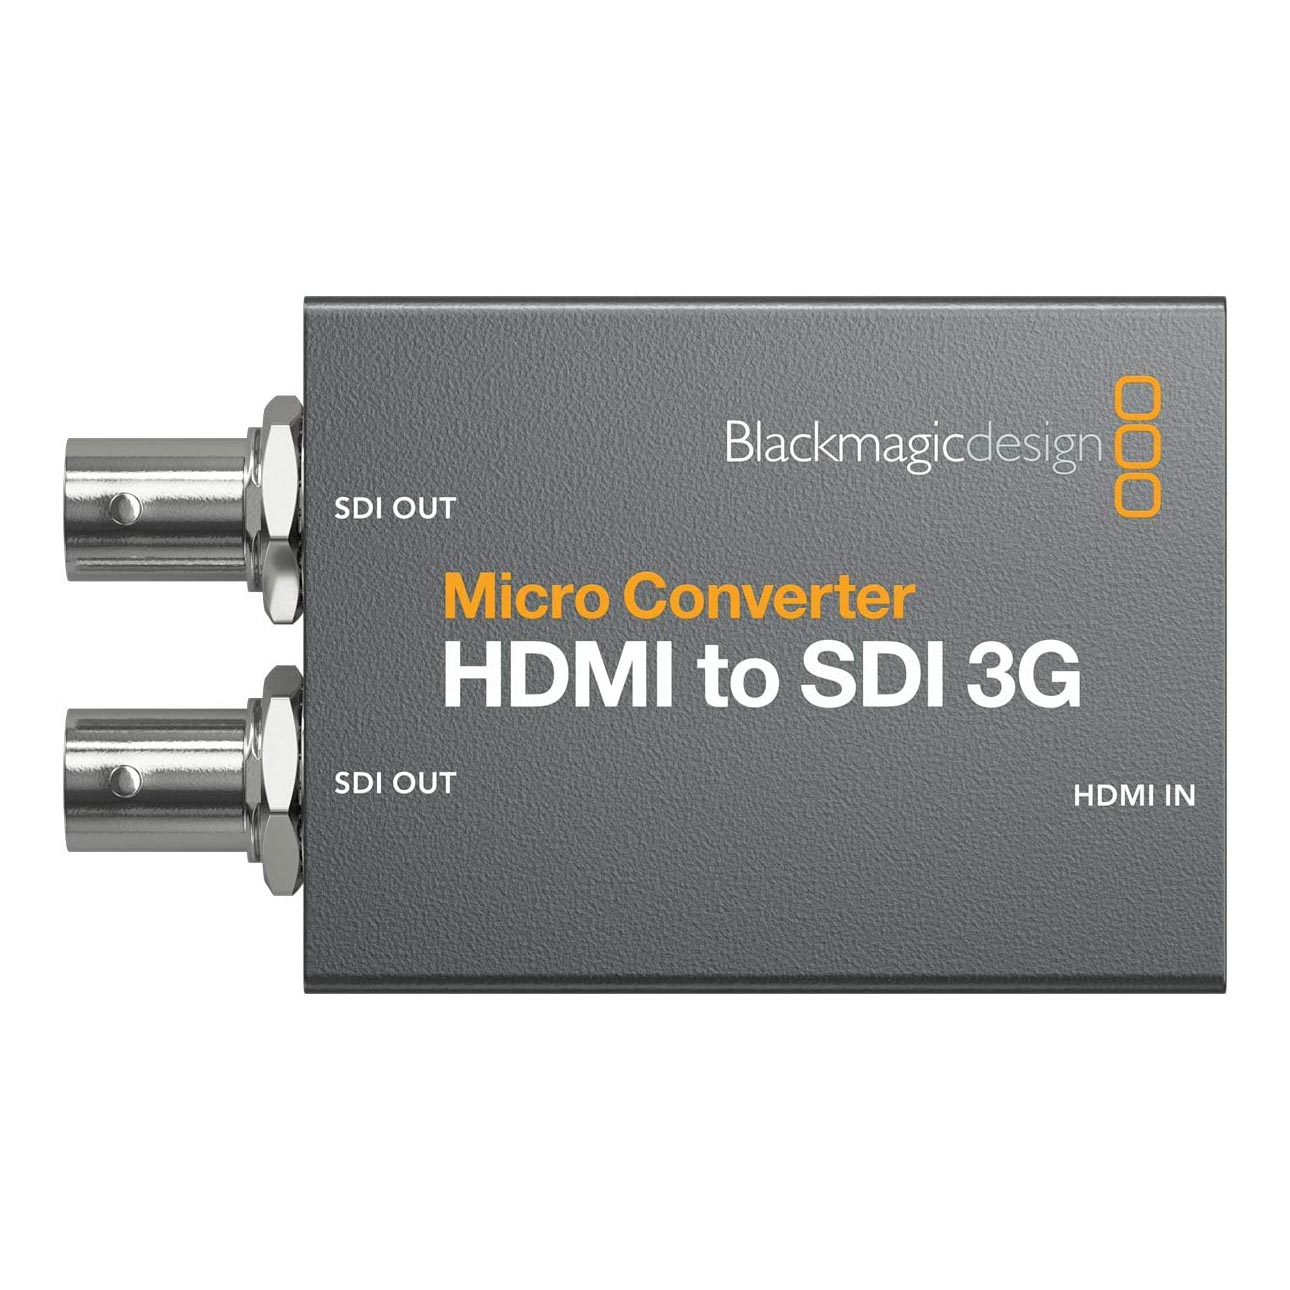 Конвертер Blackmagic Design Micro Converter HDMI to SDI 3G конвертер ugreen cm101 40744 hdmi to vga hdmi converter черный